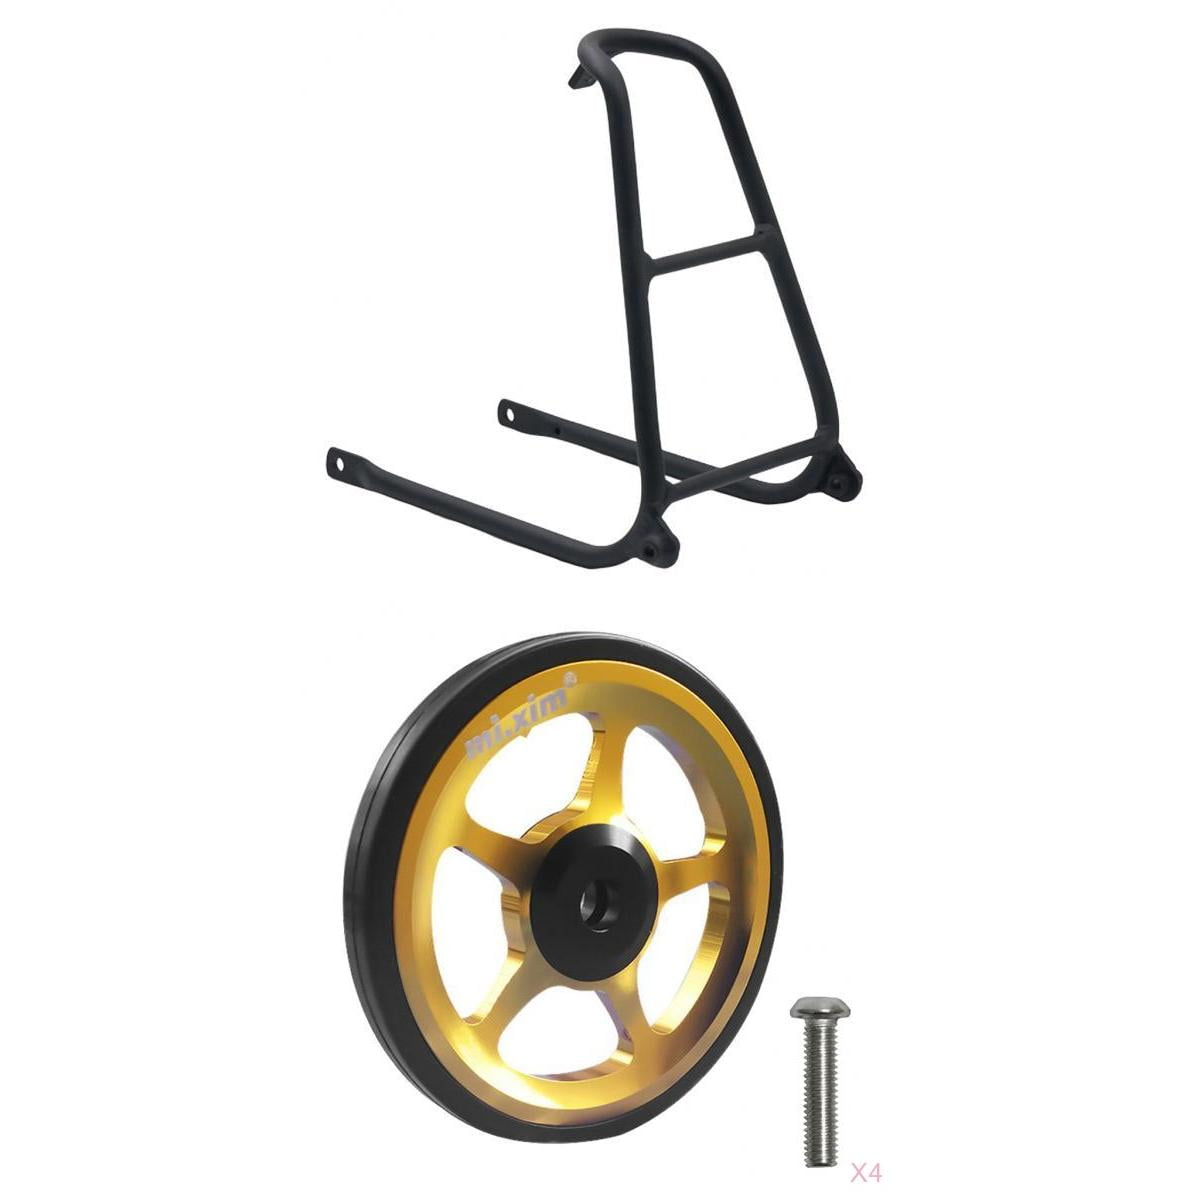 Alloy Folding Bike Rear Racks Easywheel Mount EZ Wheels Bracket for 